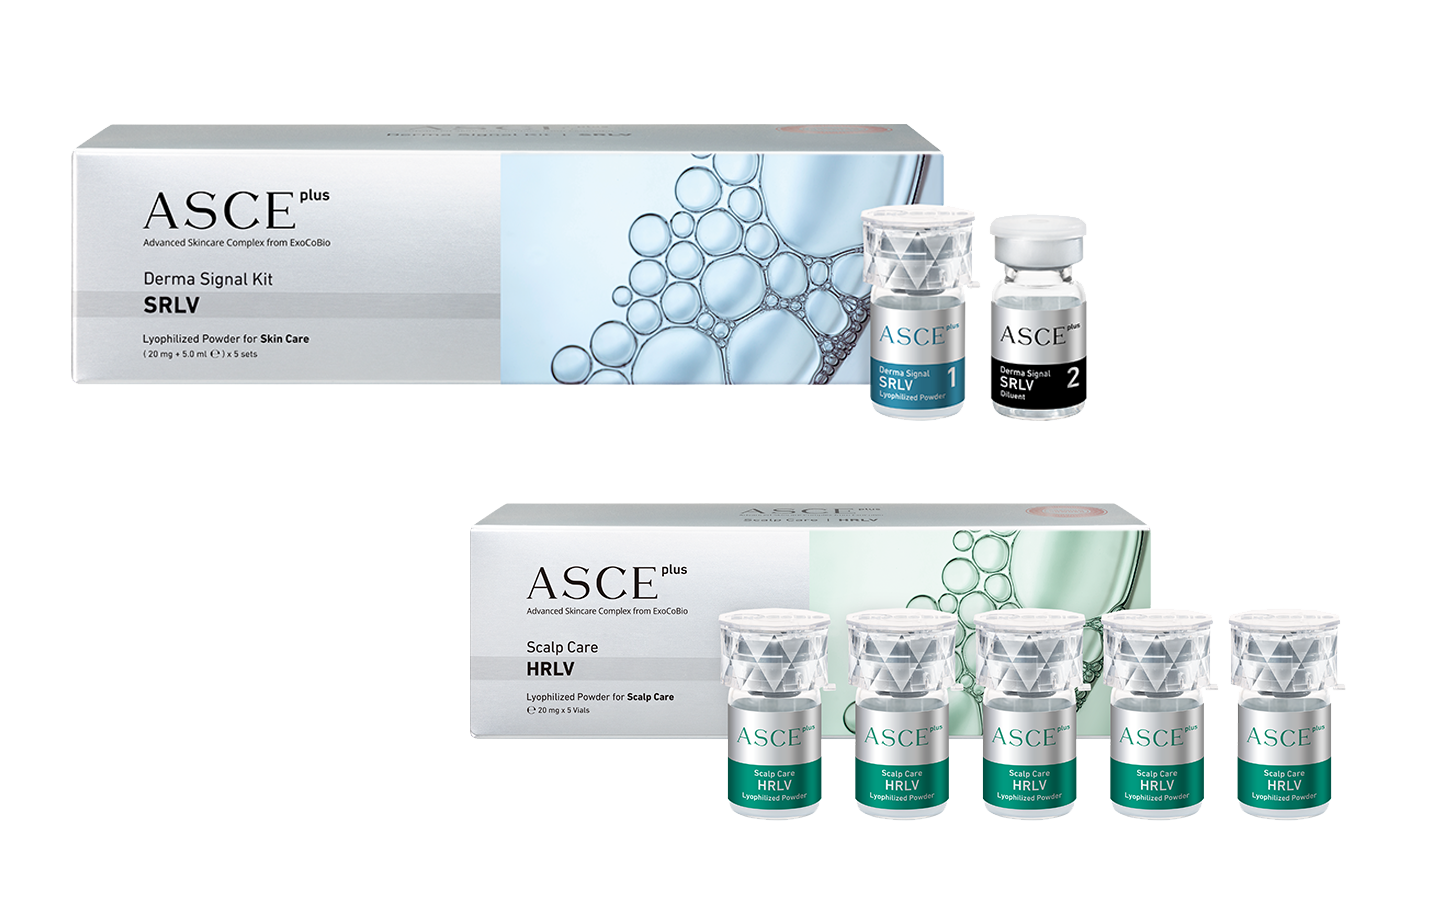 ASCEplus HRLV ASCEplus SRLV excobio exosomi enermedica medicina estetica macchinari apparecchiature prodotti